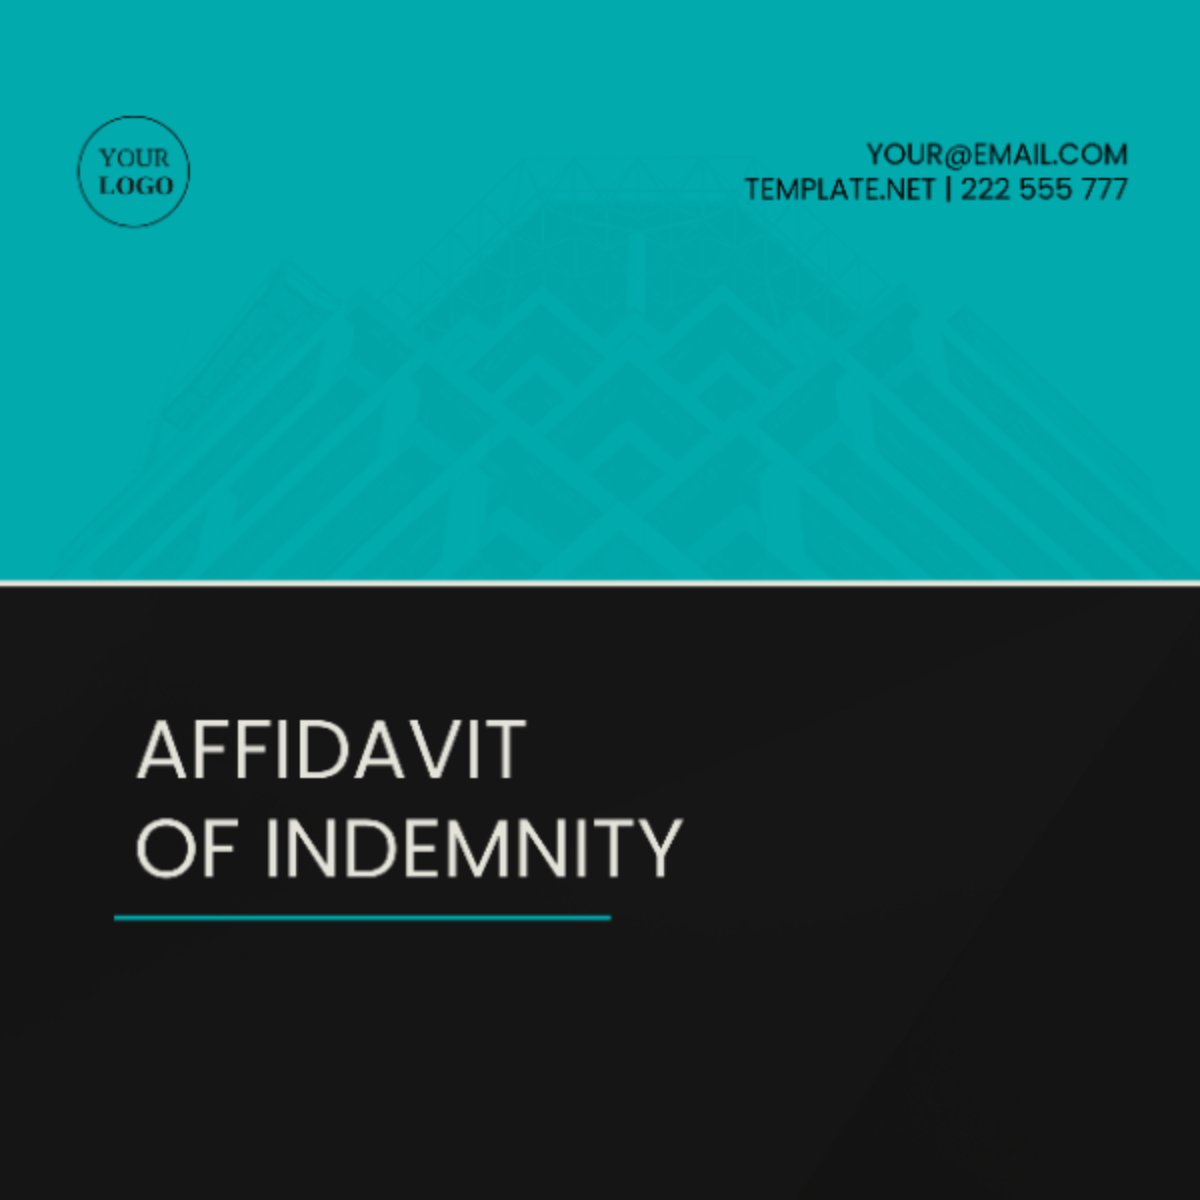 Affidavit of Indemnity Template